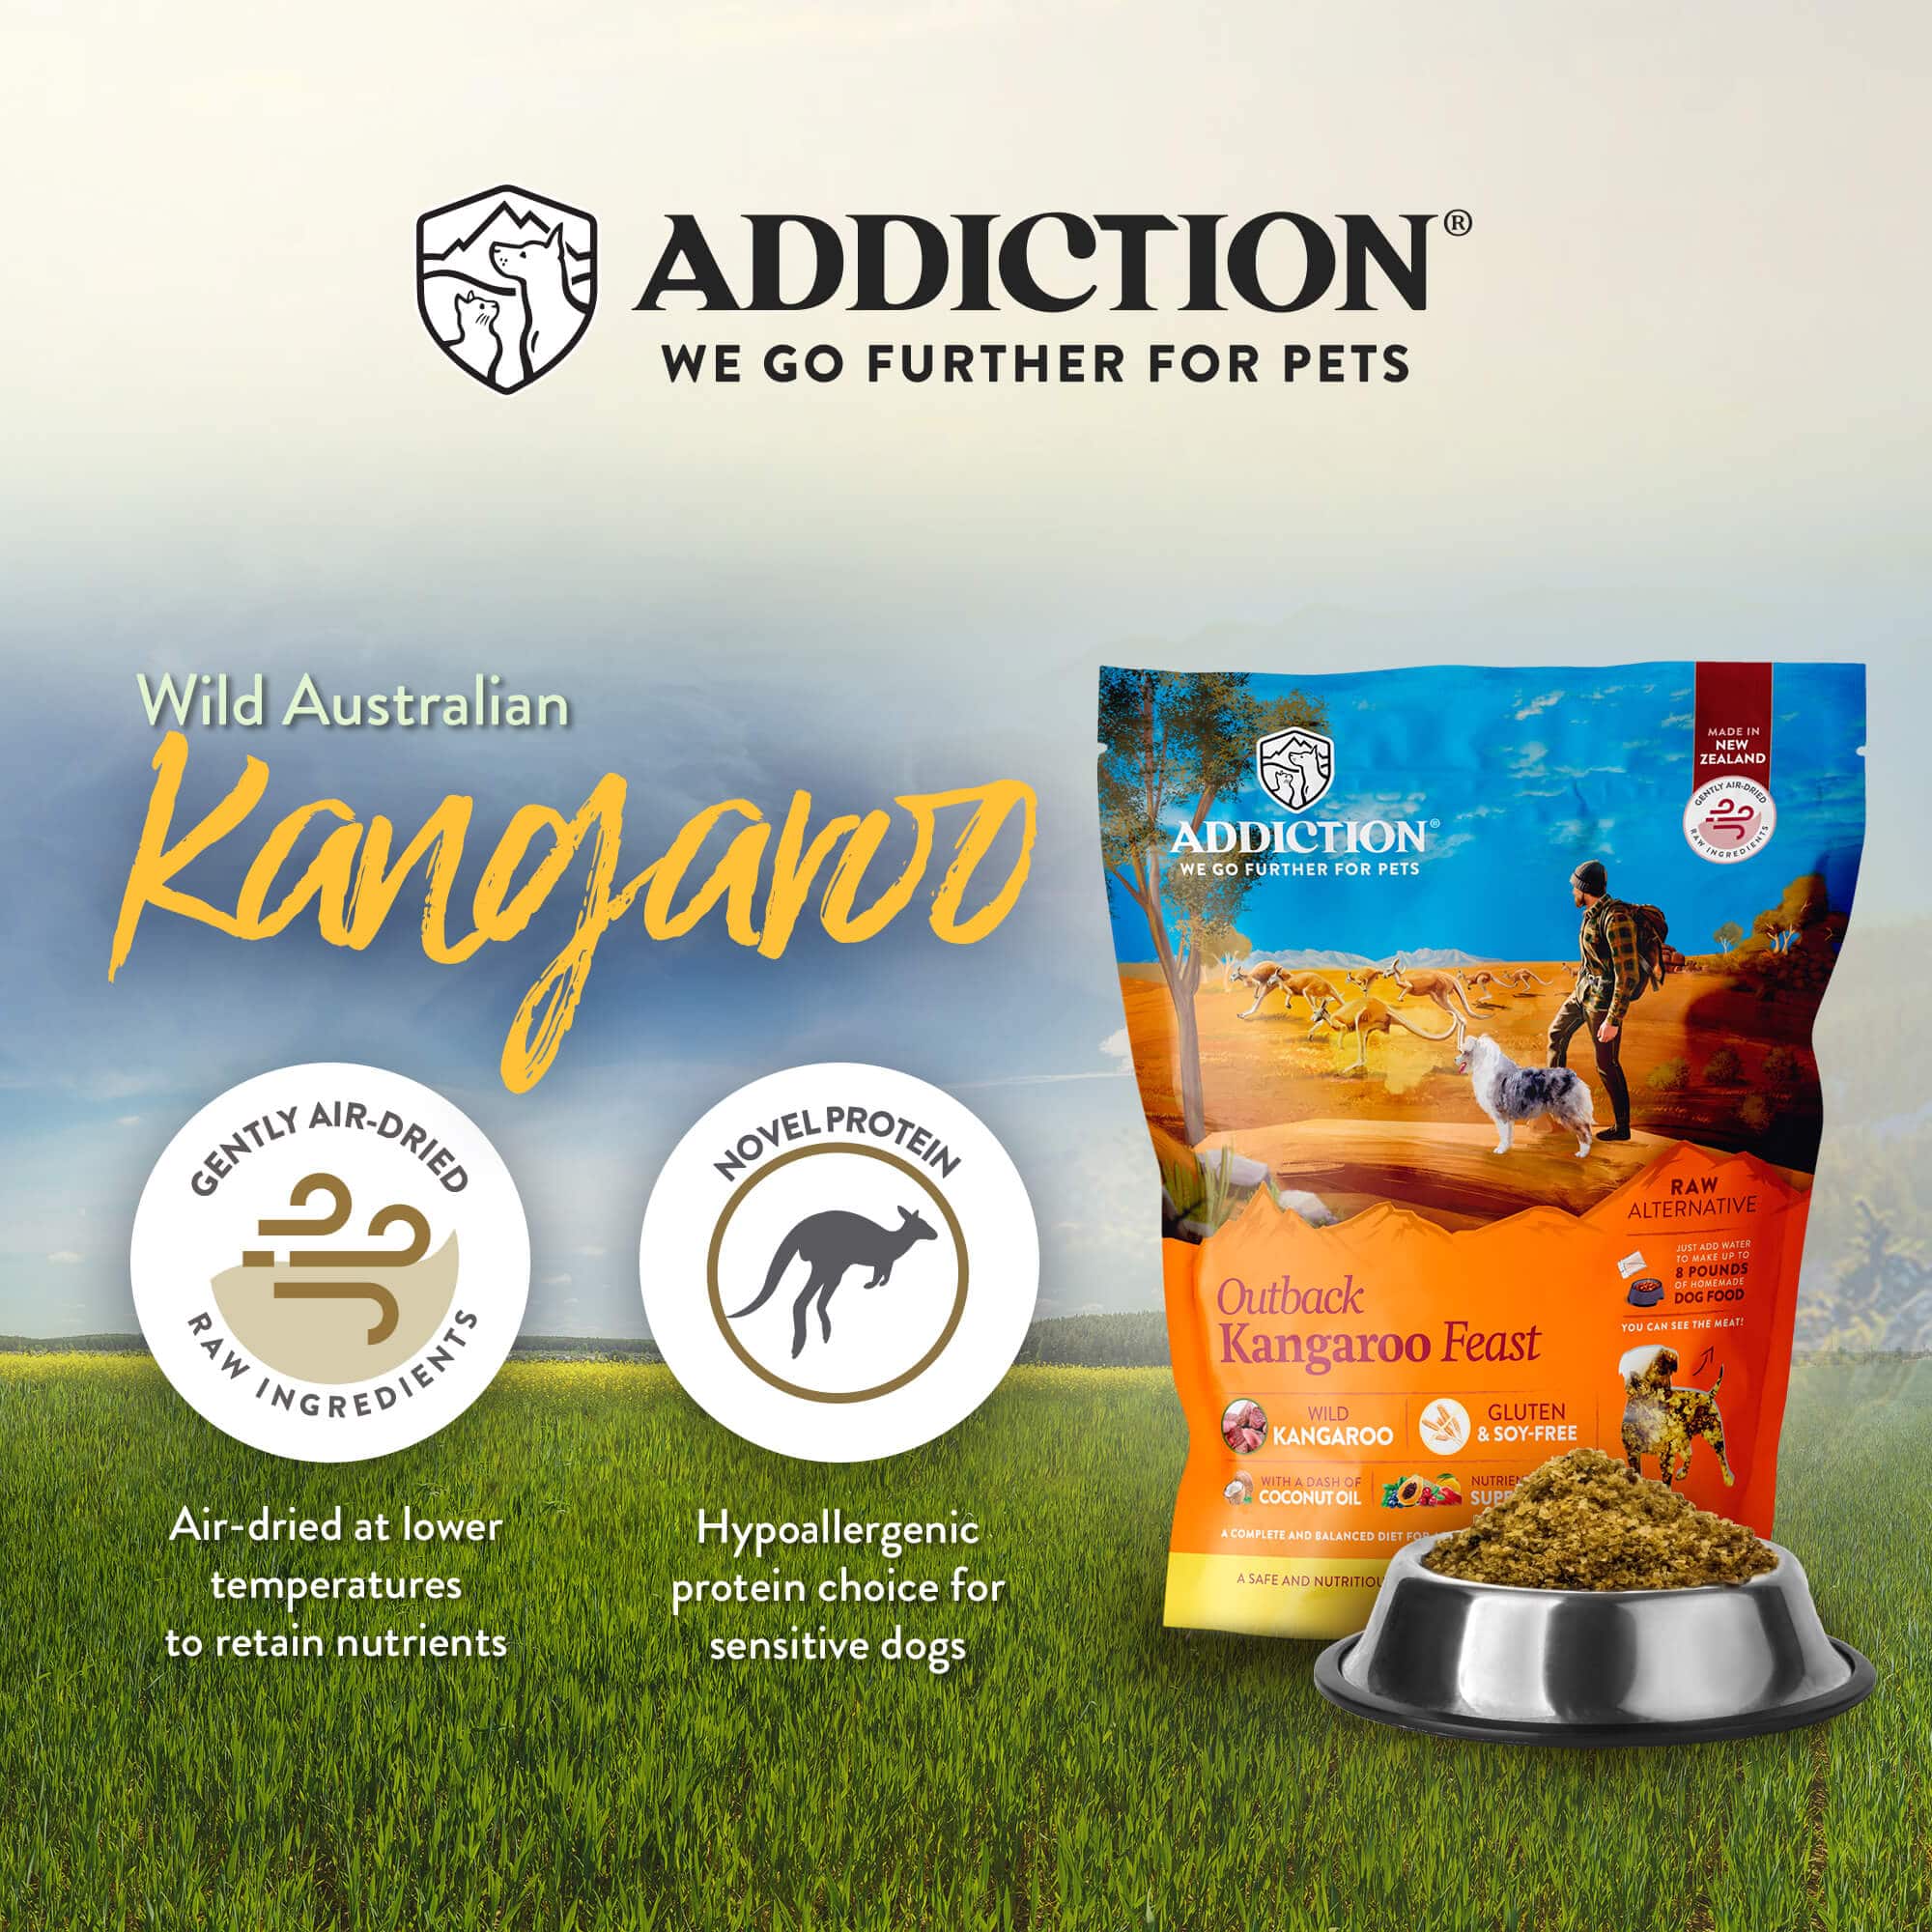 Addiction Outback Kangaroo Feast Grain Free Raw Dehydrated Dog Food (2lbs)